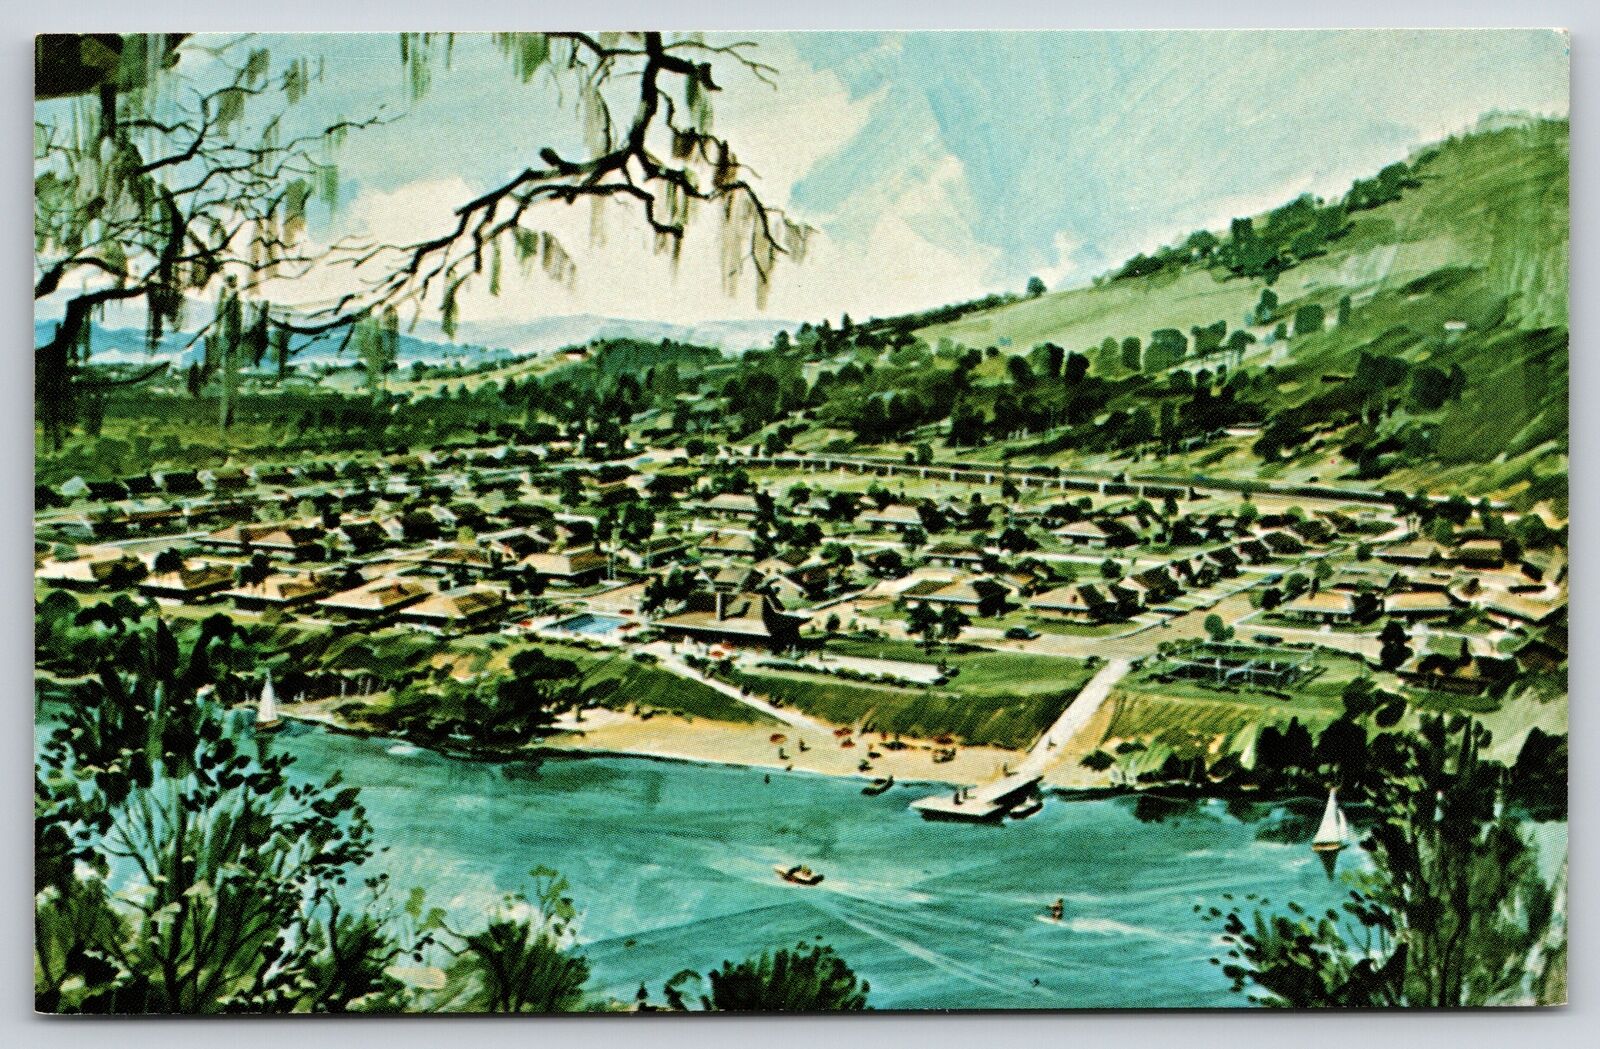 Artist Conception~Air View Rivers Bend @ Healdsburg CA~Vintage Postcard